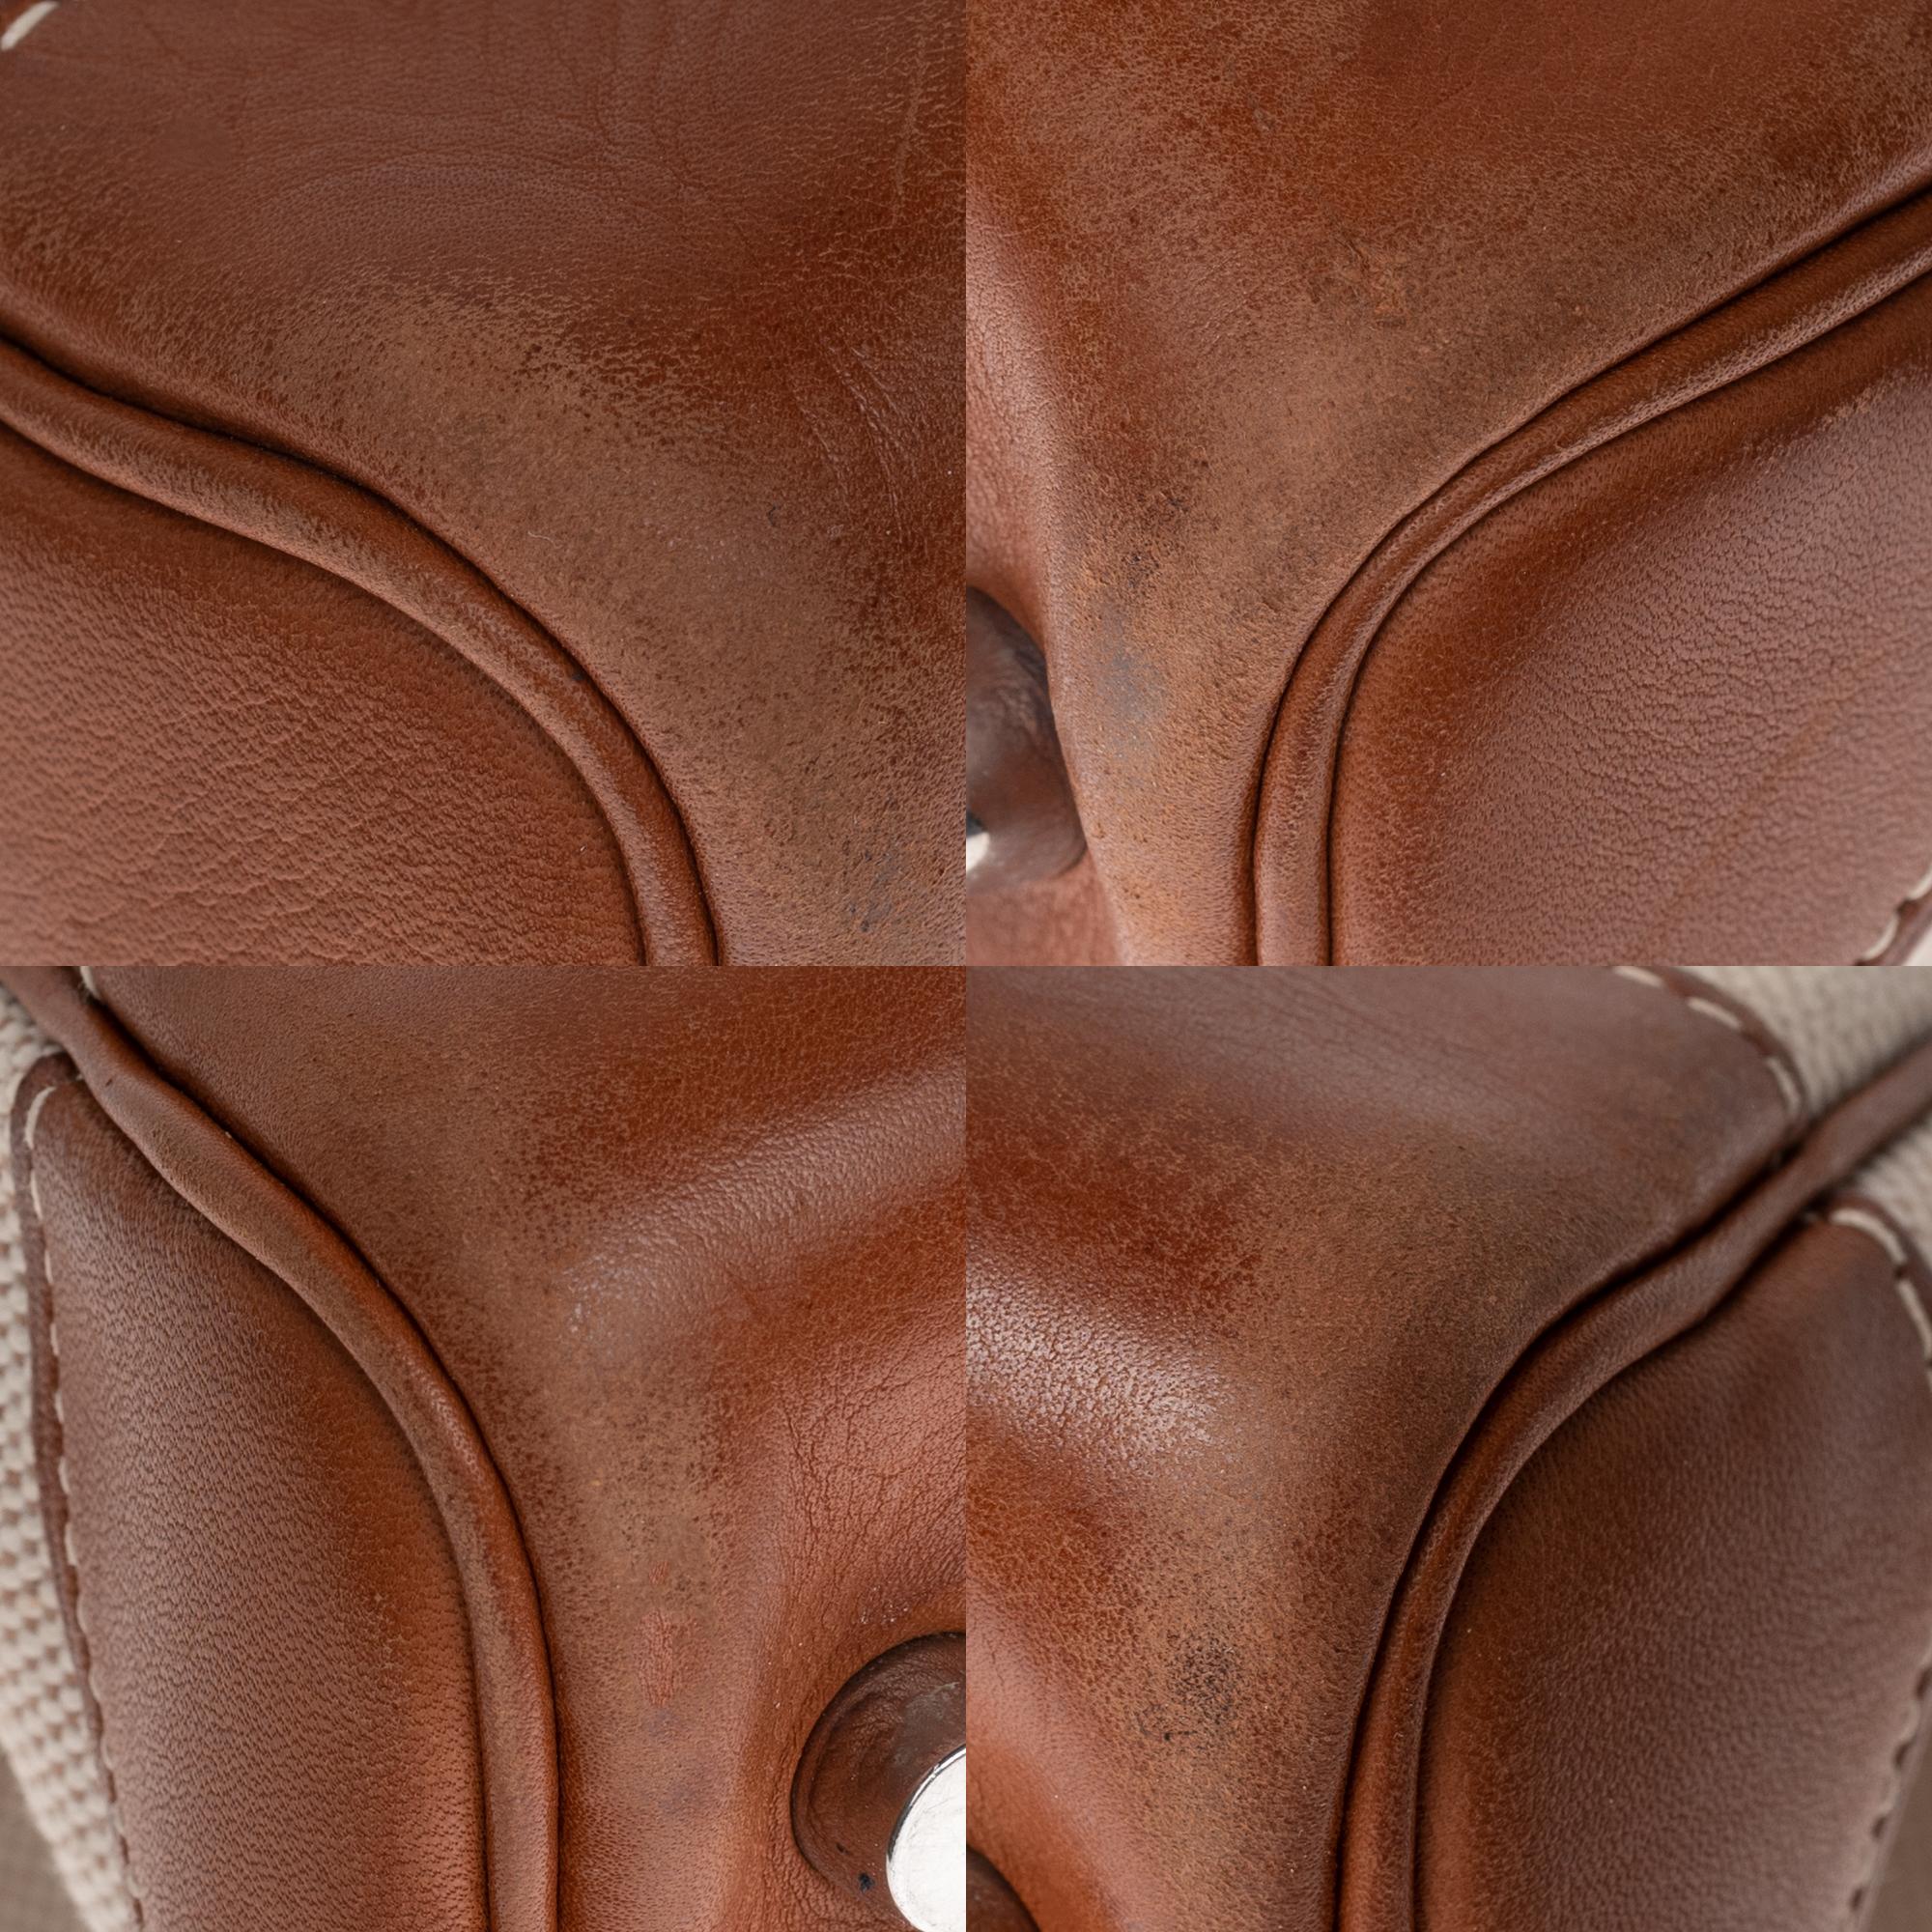 Hermès Haut à Courroies 32 handbag in beige canvas & brown barenia leather, PHW 2